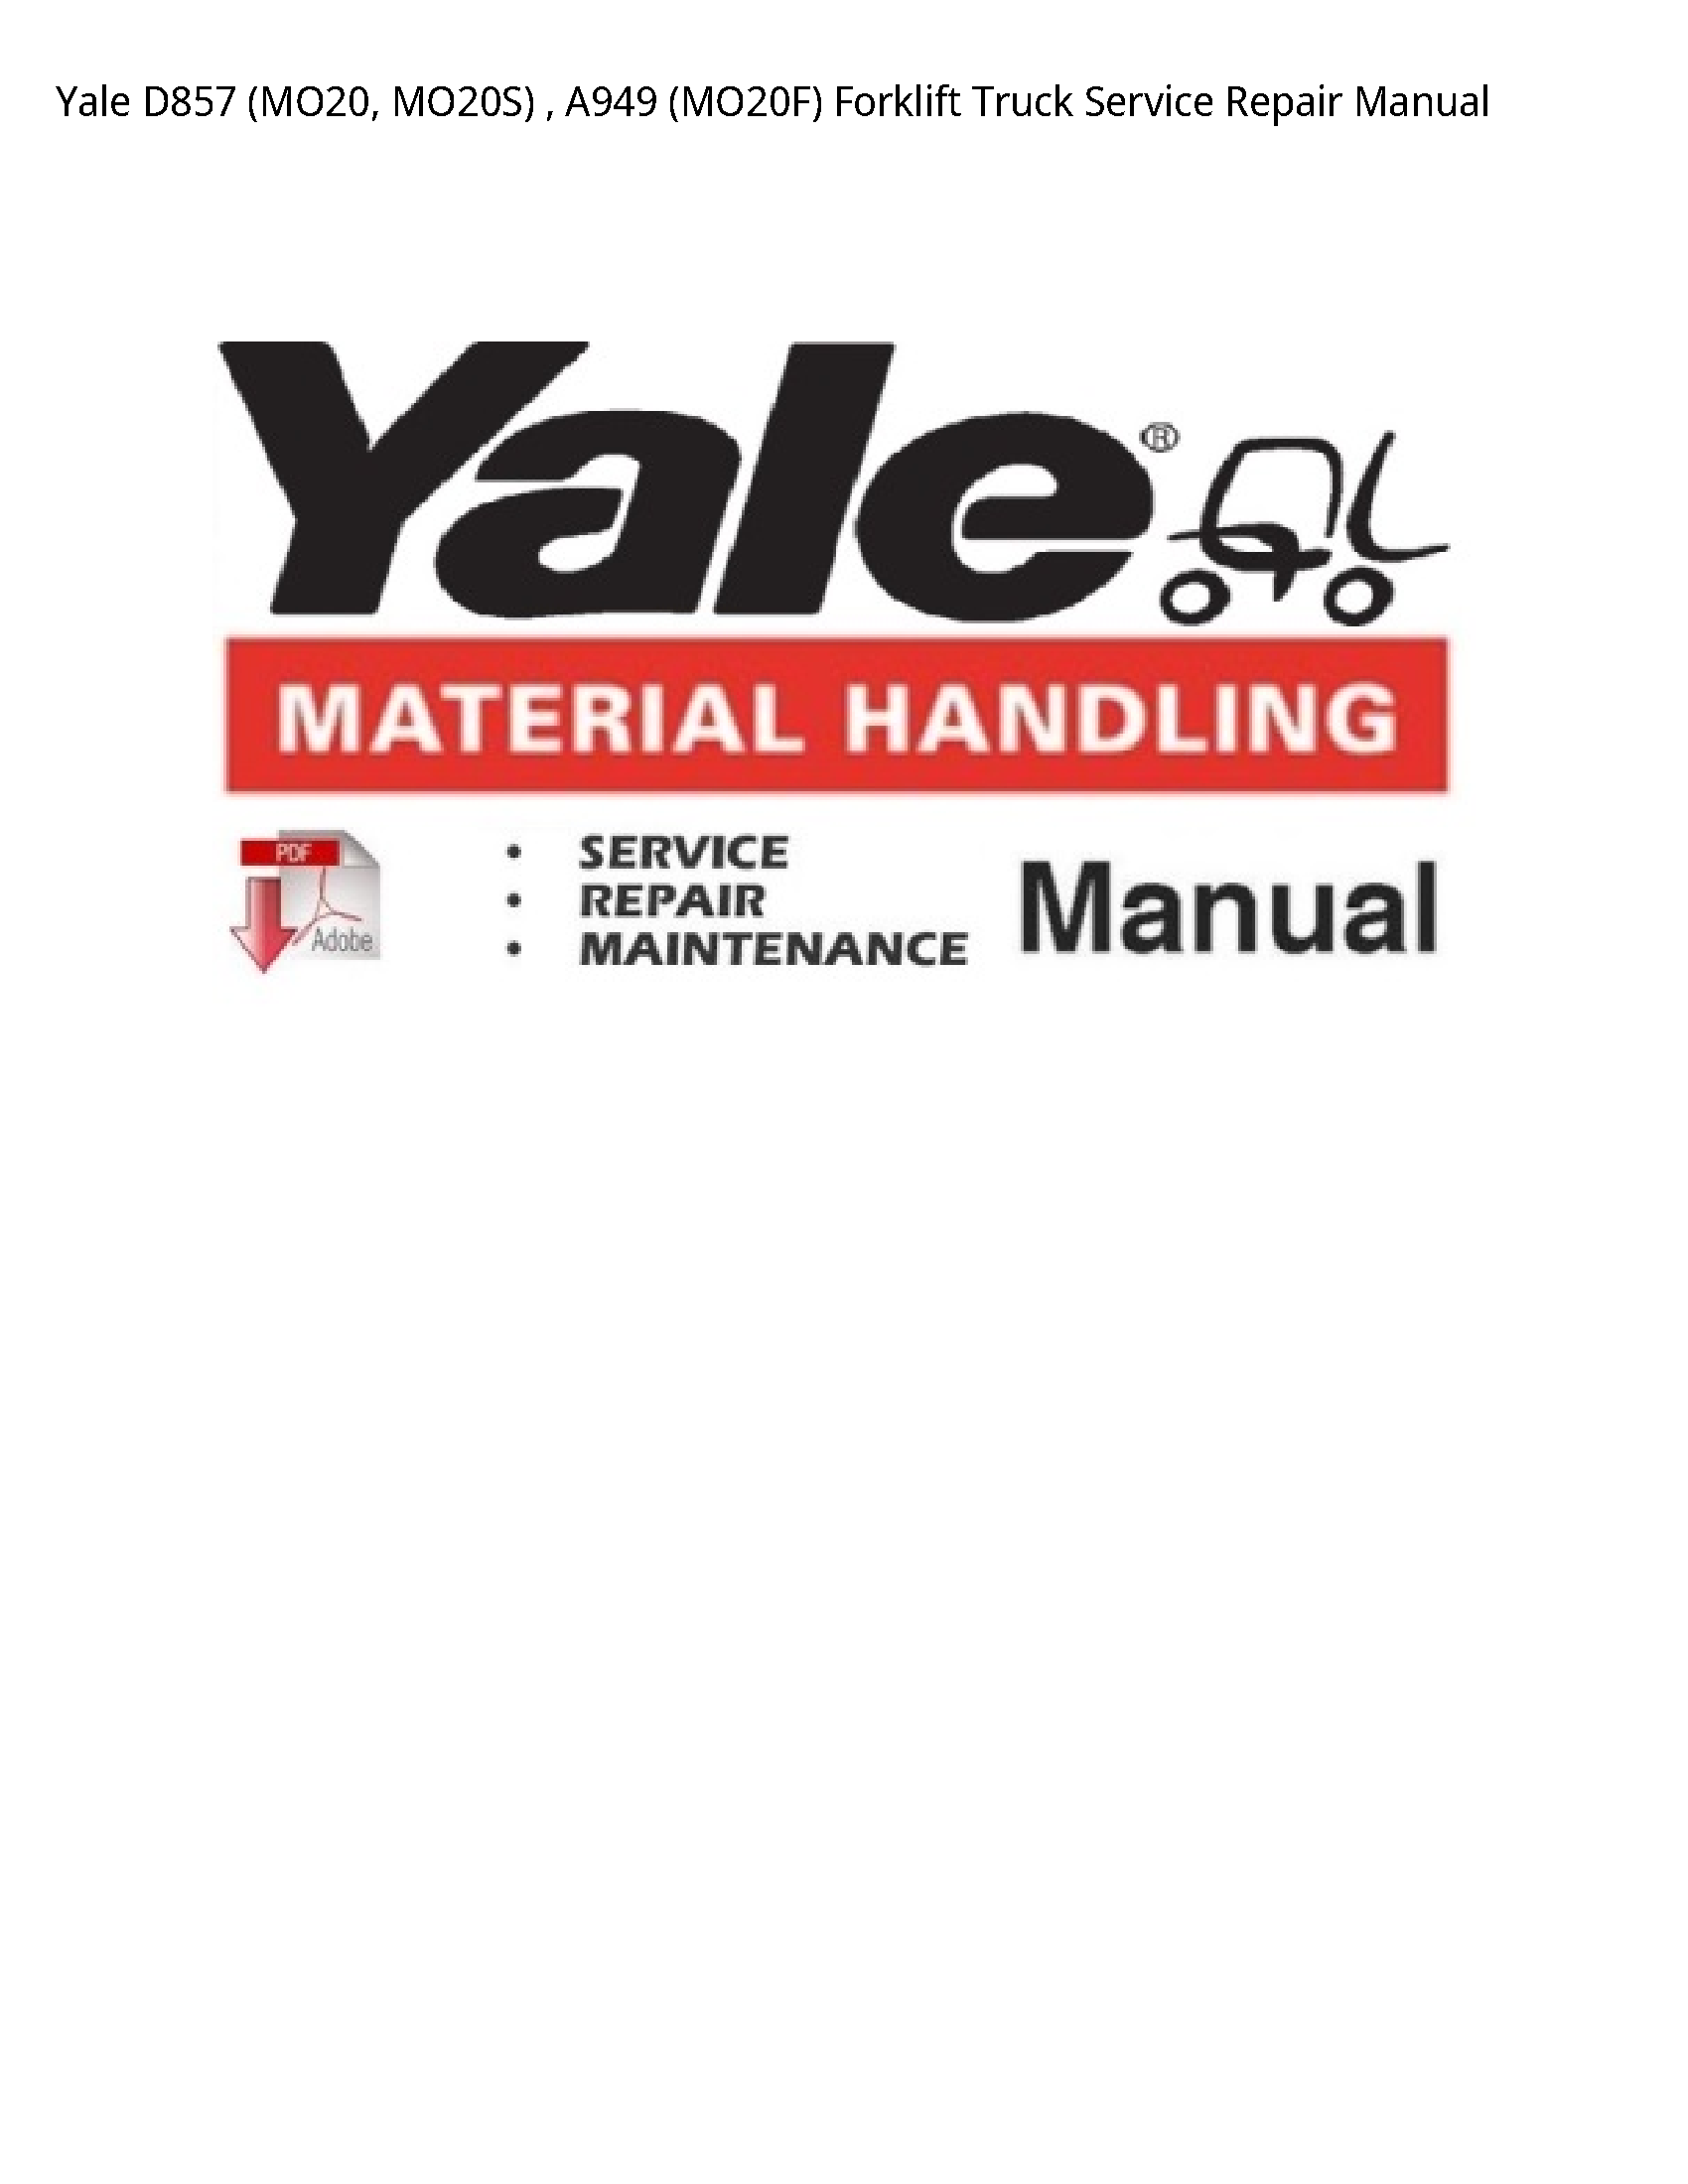 Yale D857 Forklift Truck manual